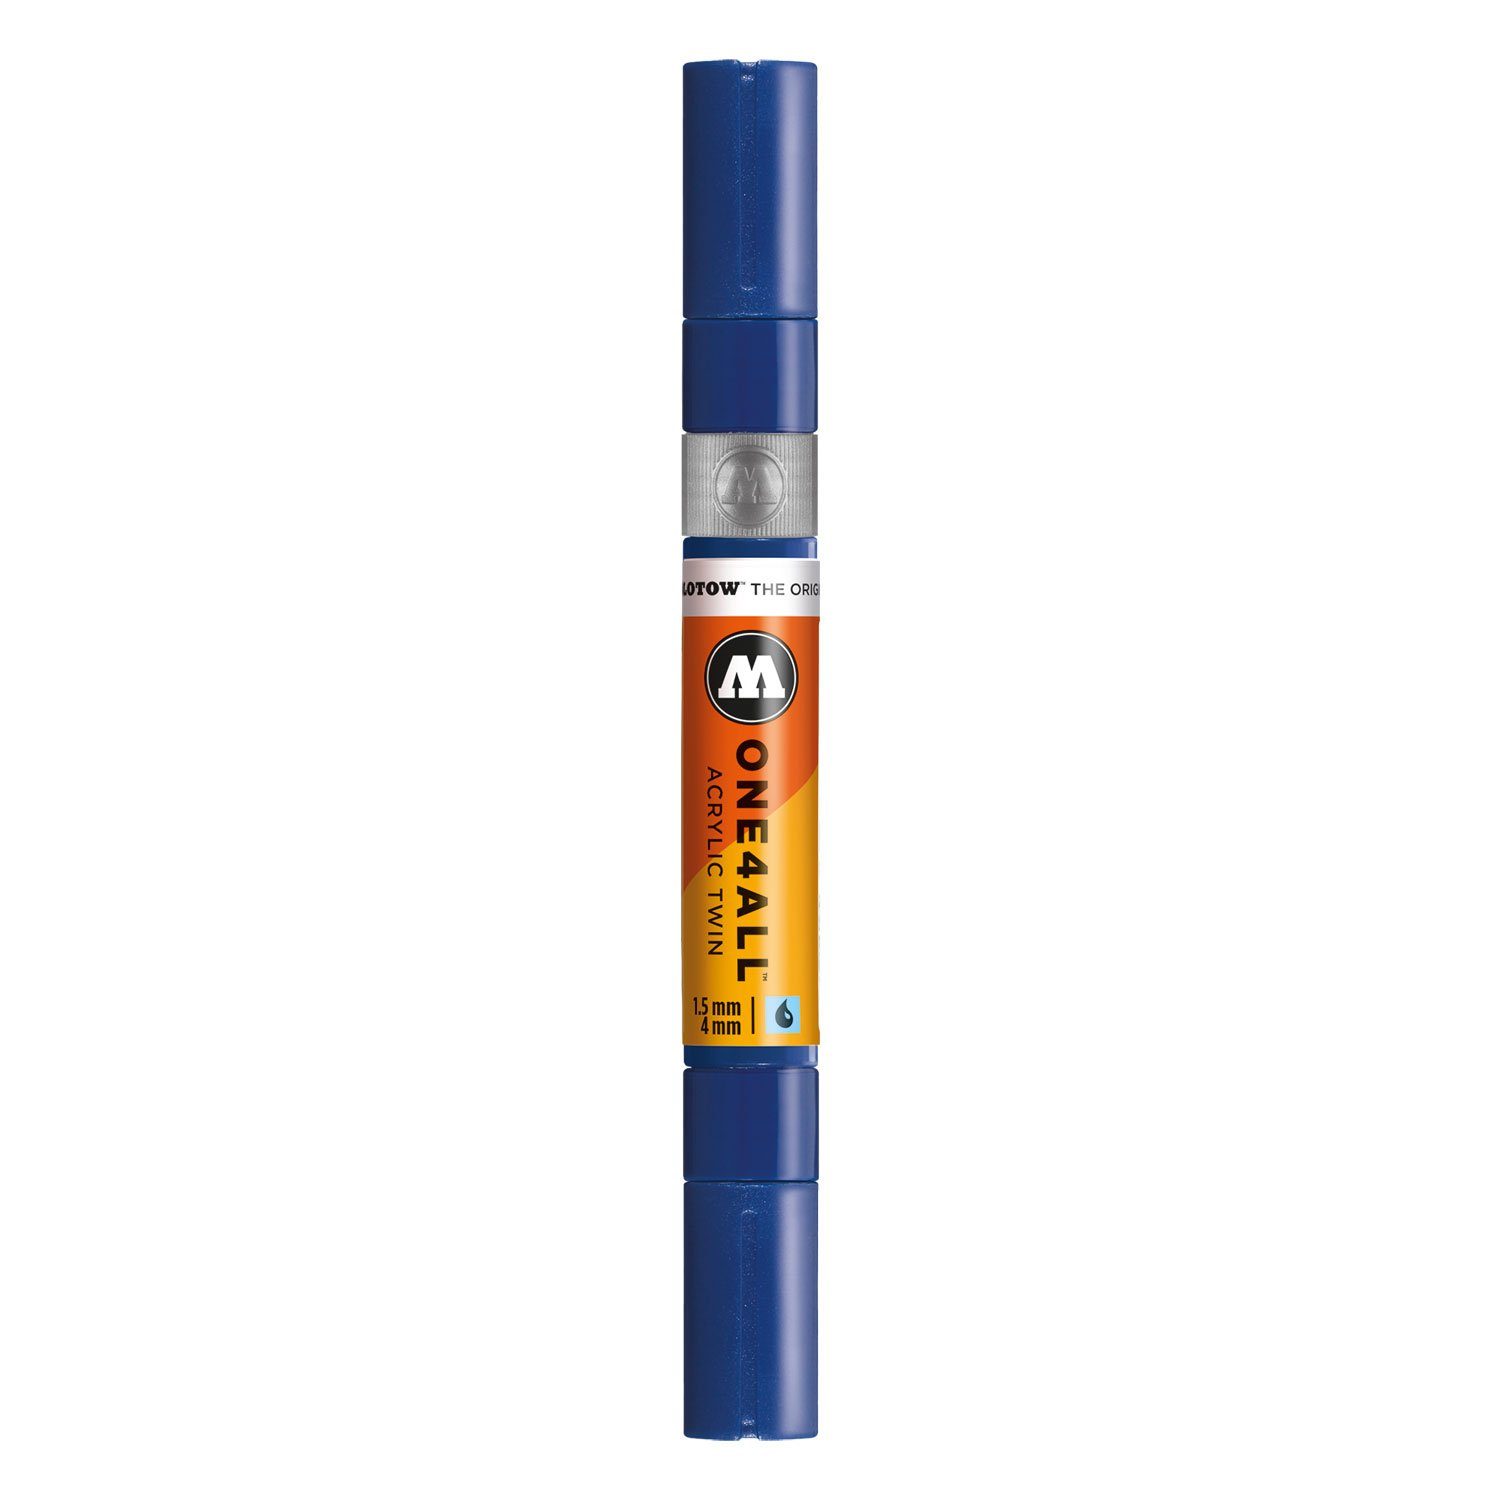 Echtblau MOLOTOW TWIN ONE4ALL Acrylmarker Marker